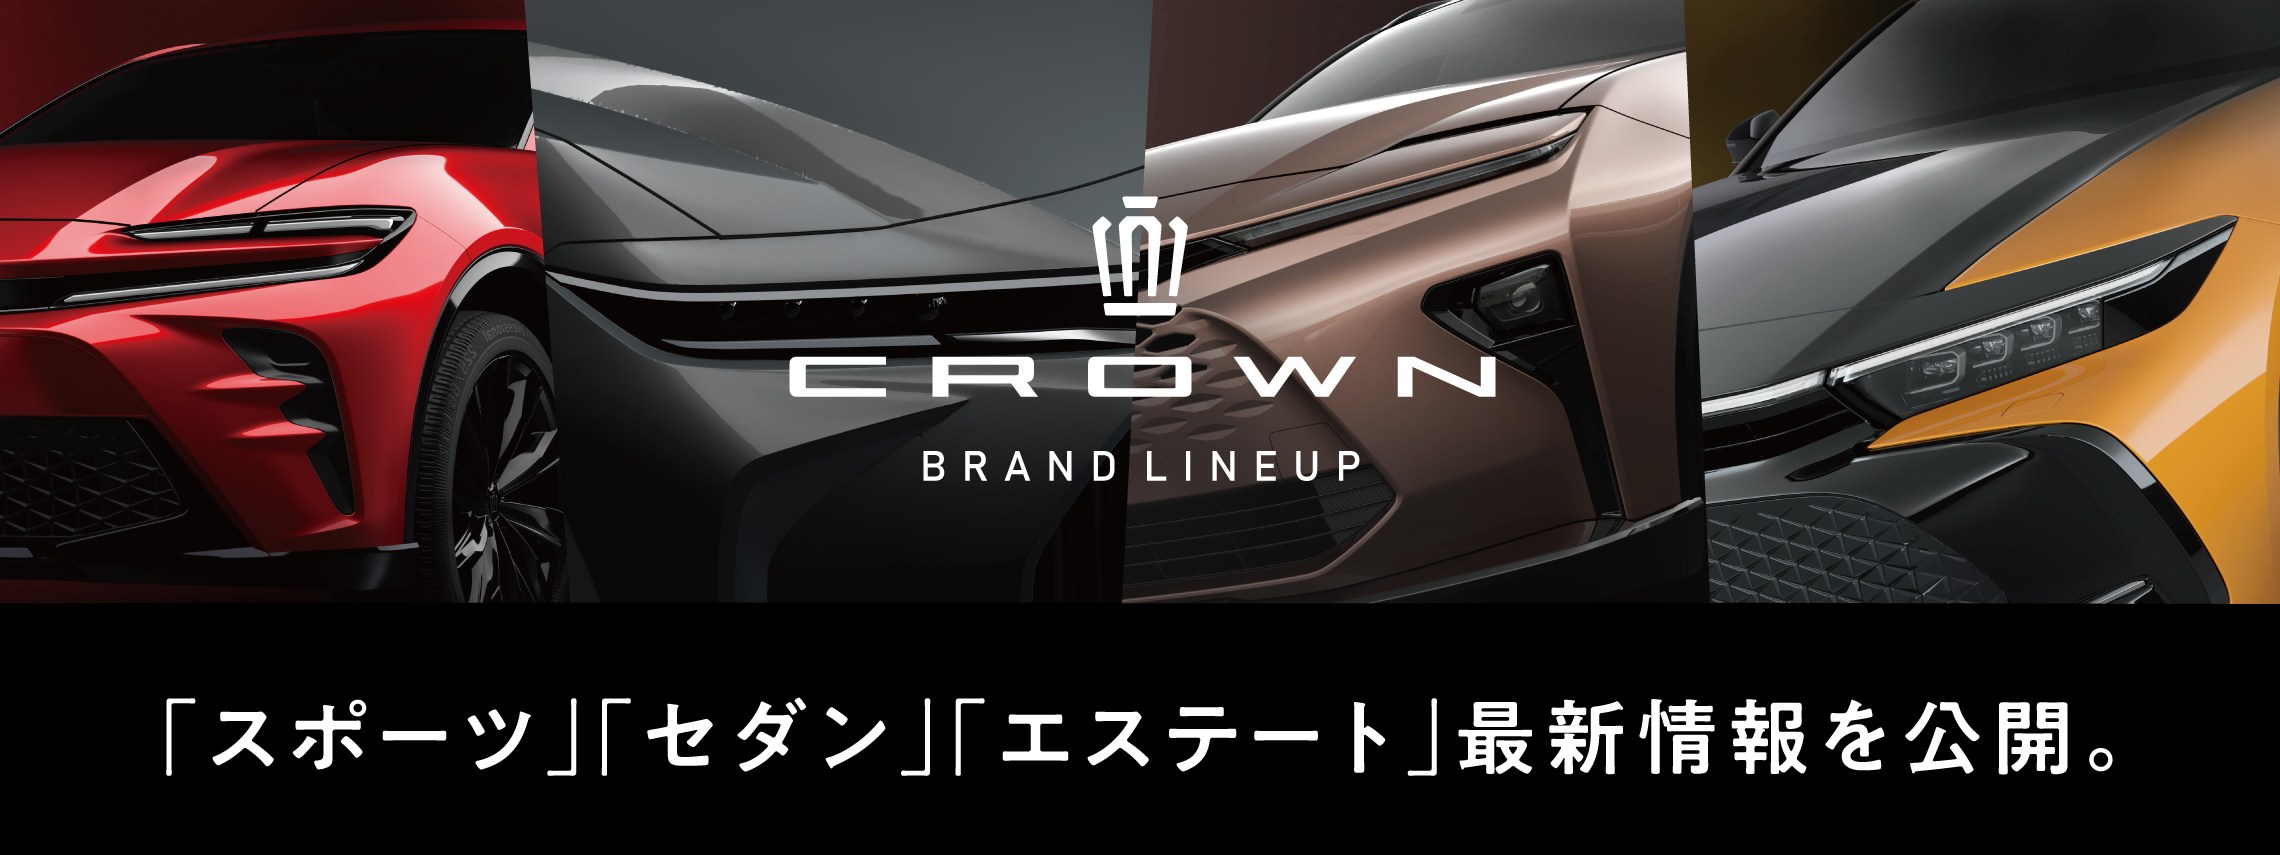 crown_brandlineup